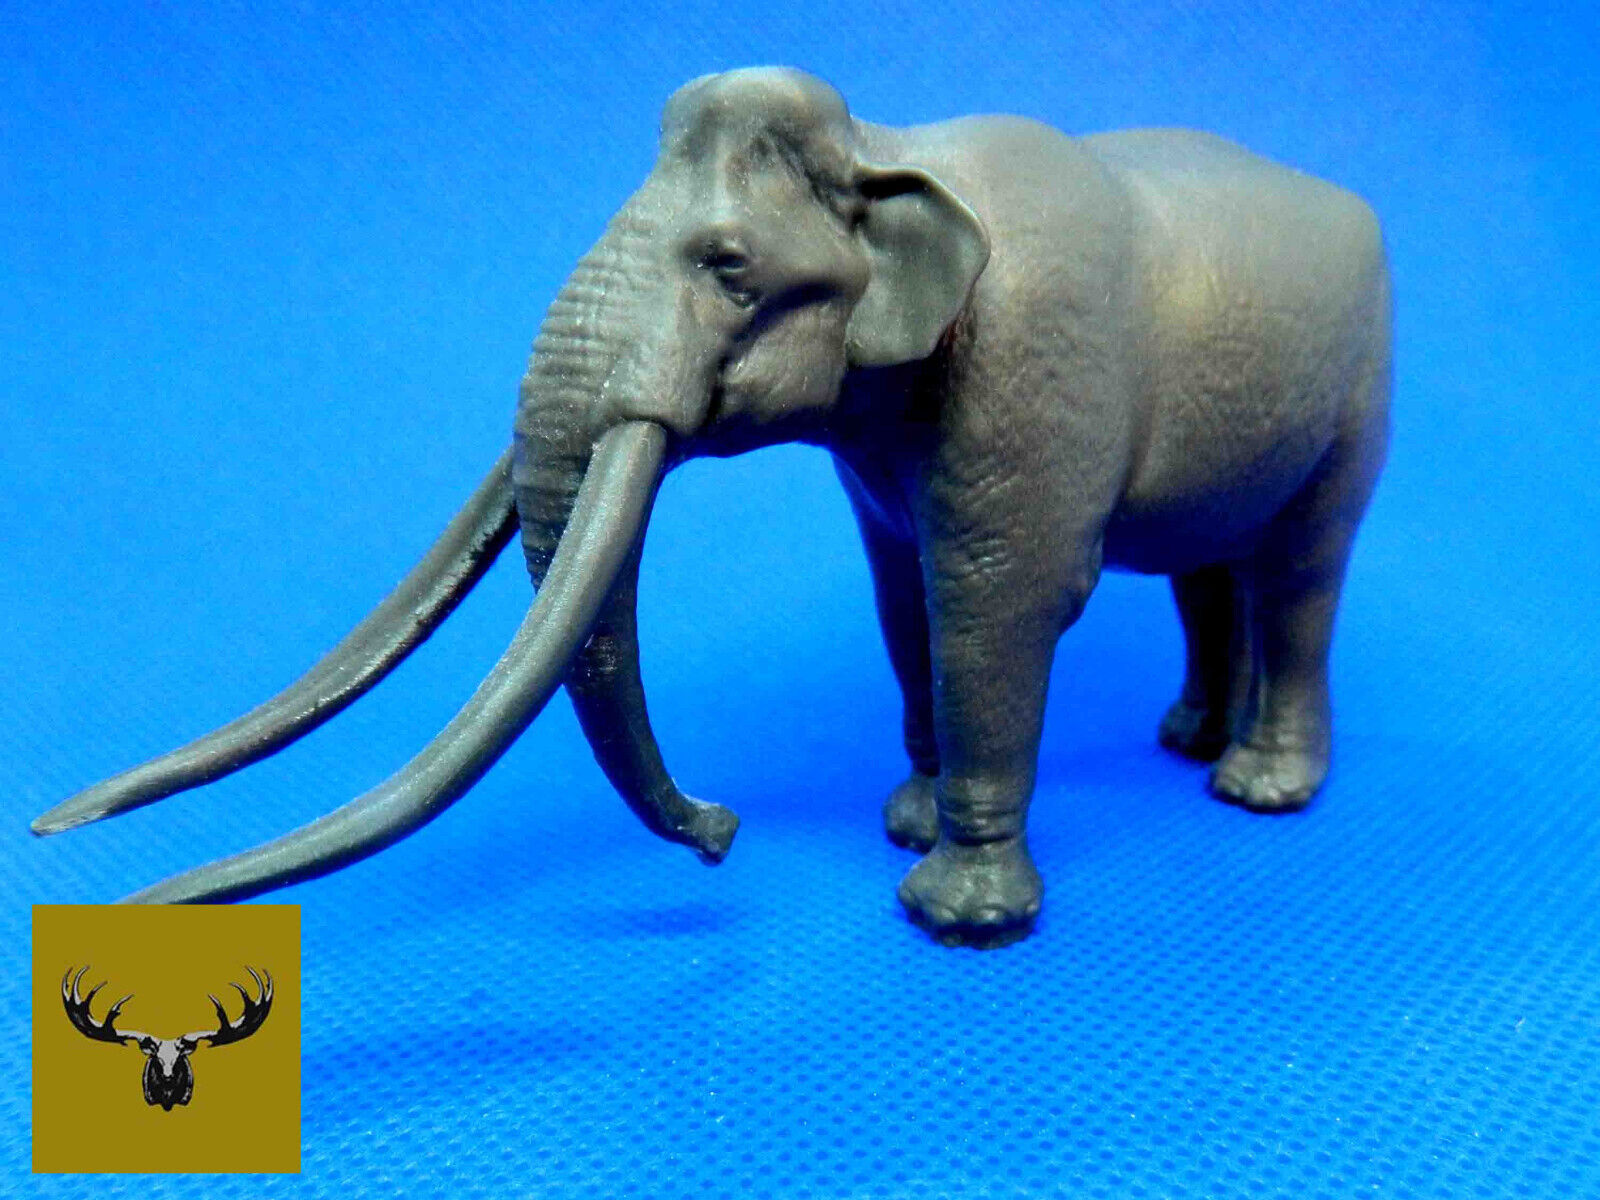 Giant, Extinct, Straight Tusk Elephant Model in 1/64 scale Cast in Resin